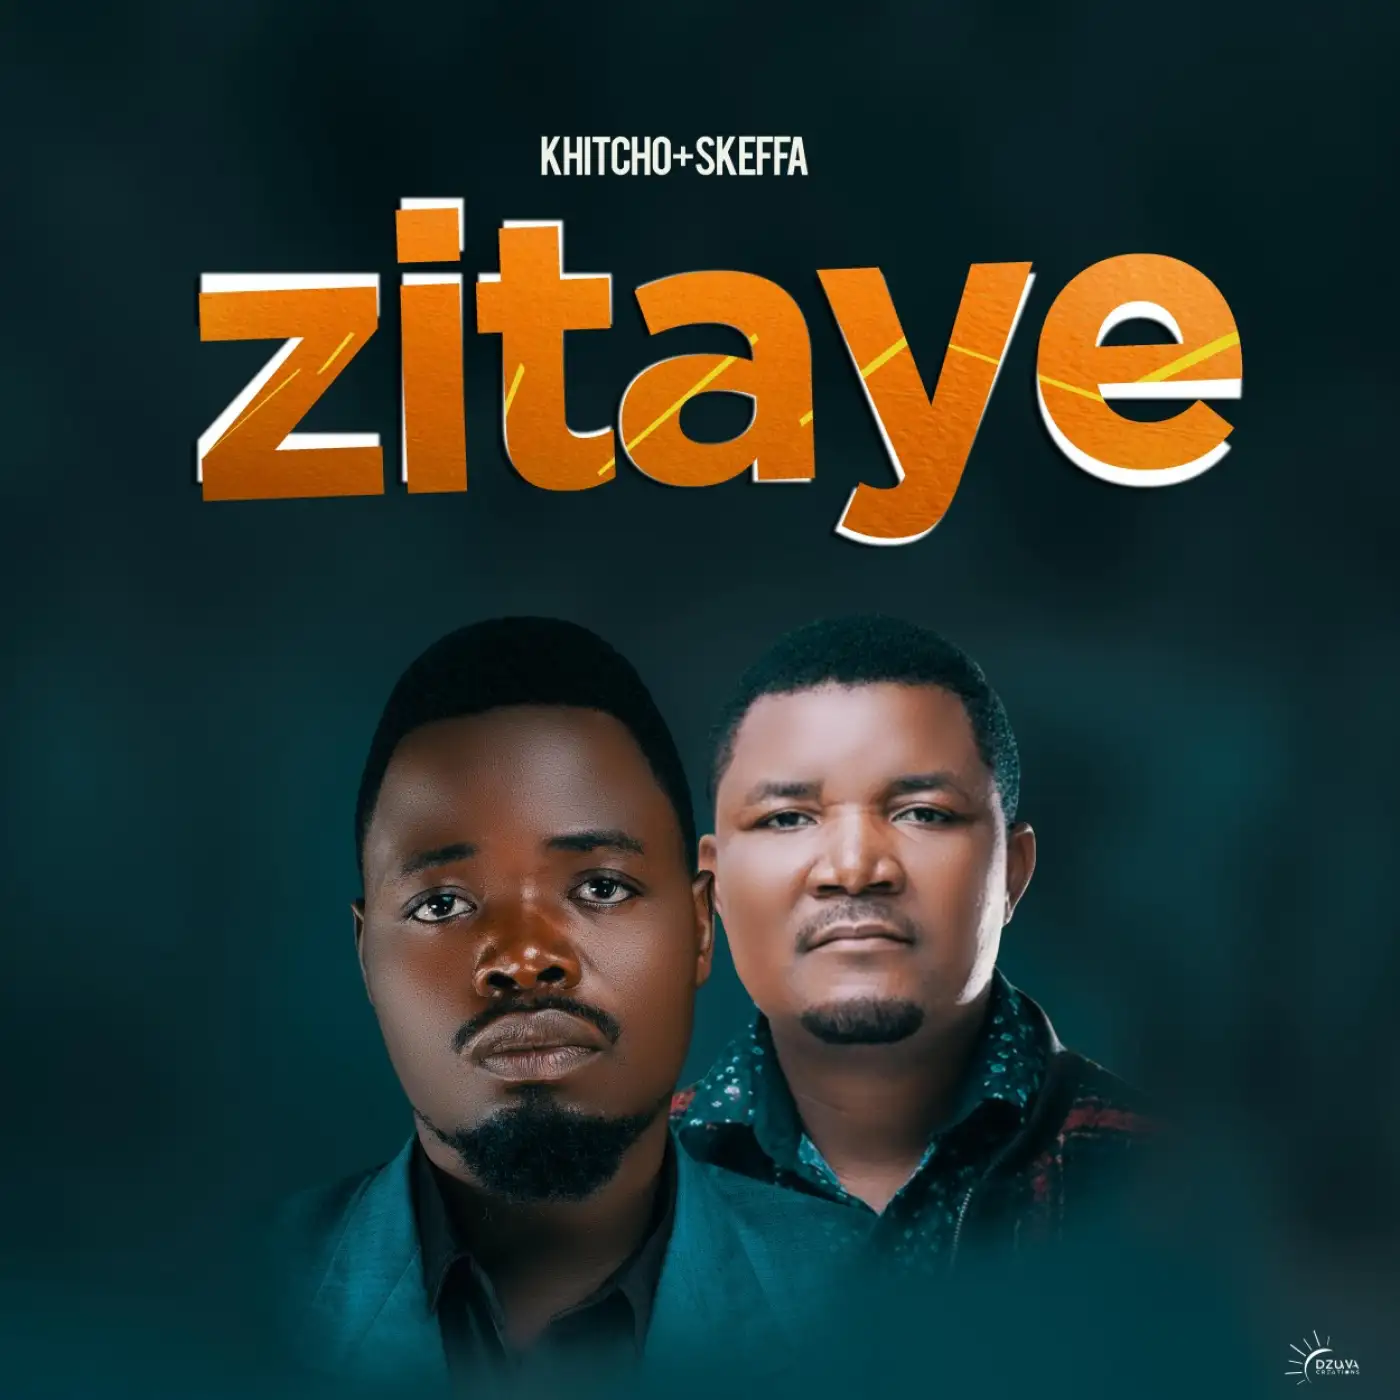 khitcho-zitaye-ft-skeffa-chimoto-mp3-download-mp3 download